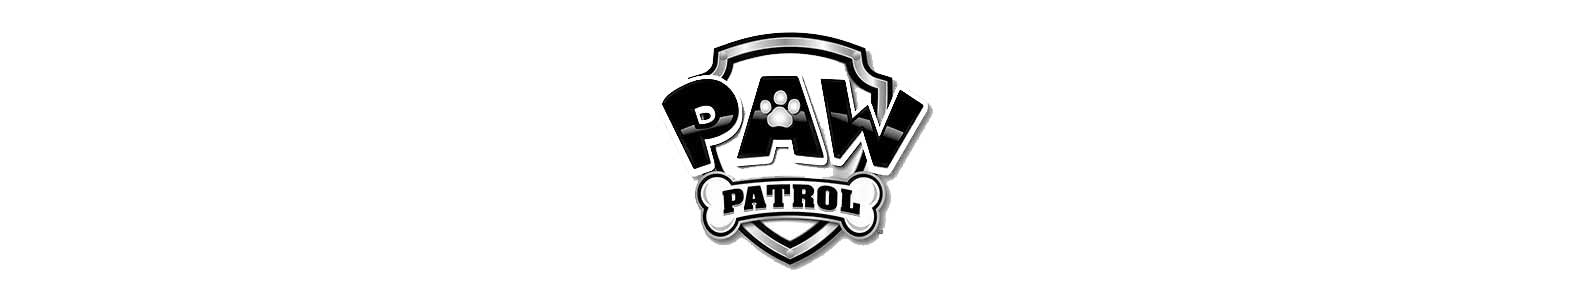 Paw Patrol brand header image